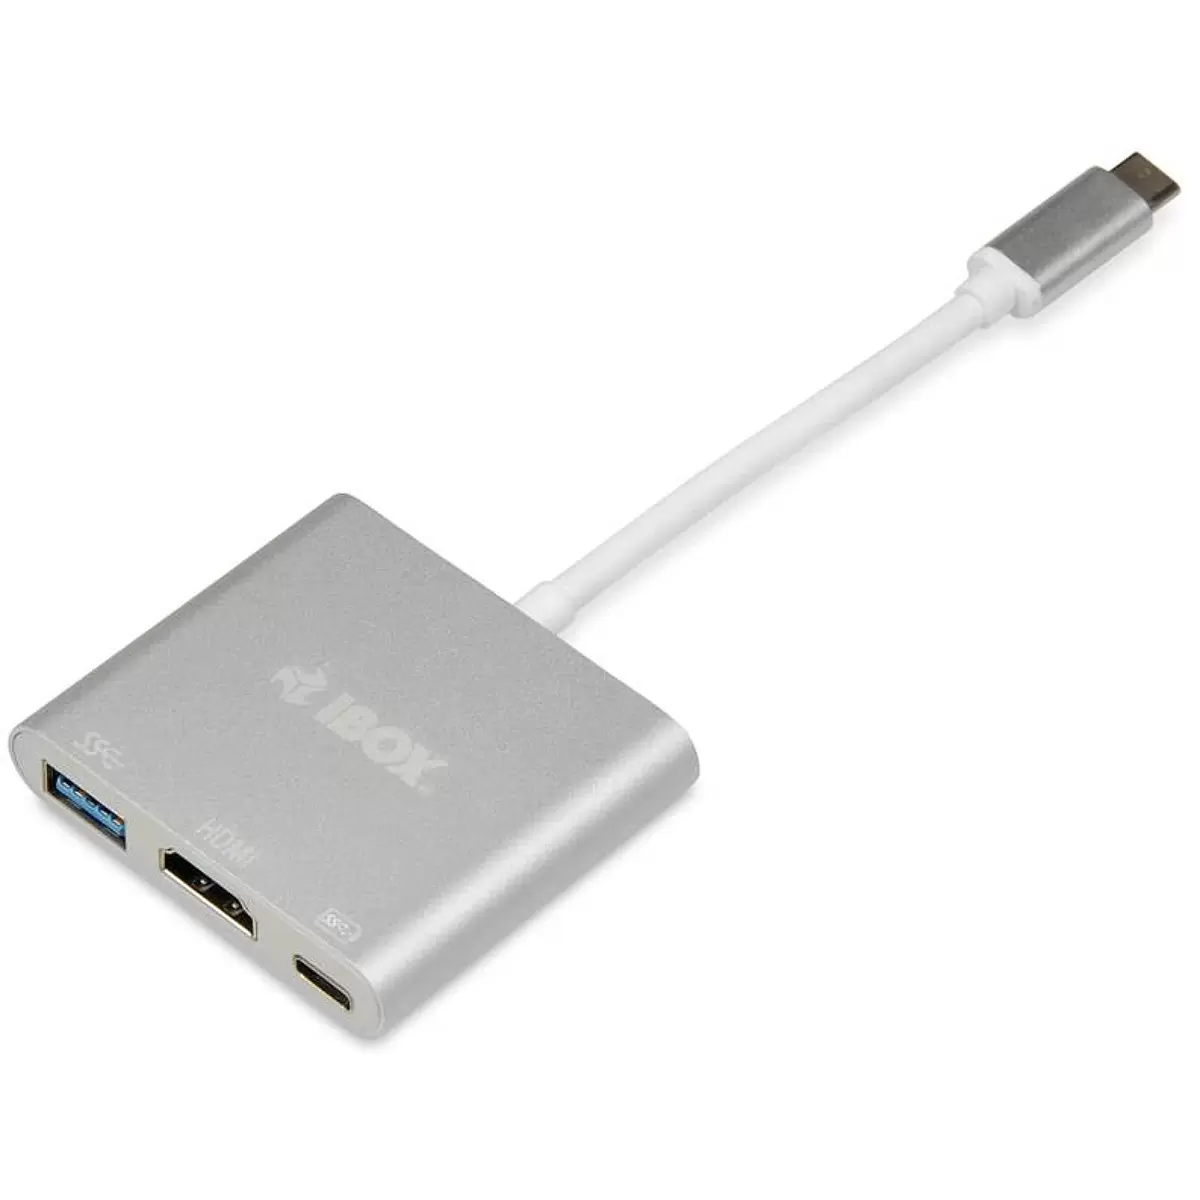 IBOX HUB USB TYPE-C POWER DELIVERY HDMI